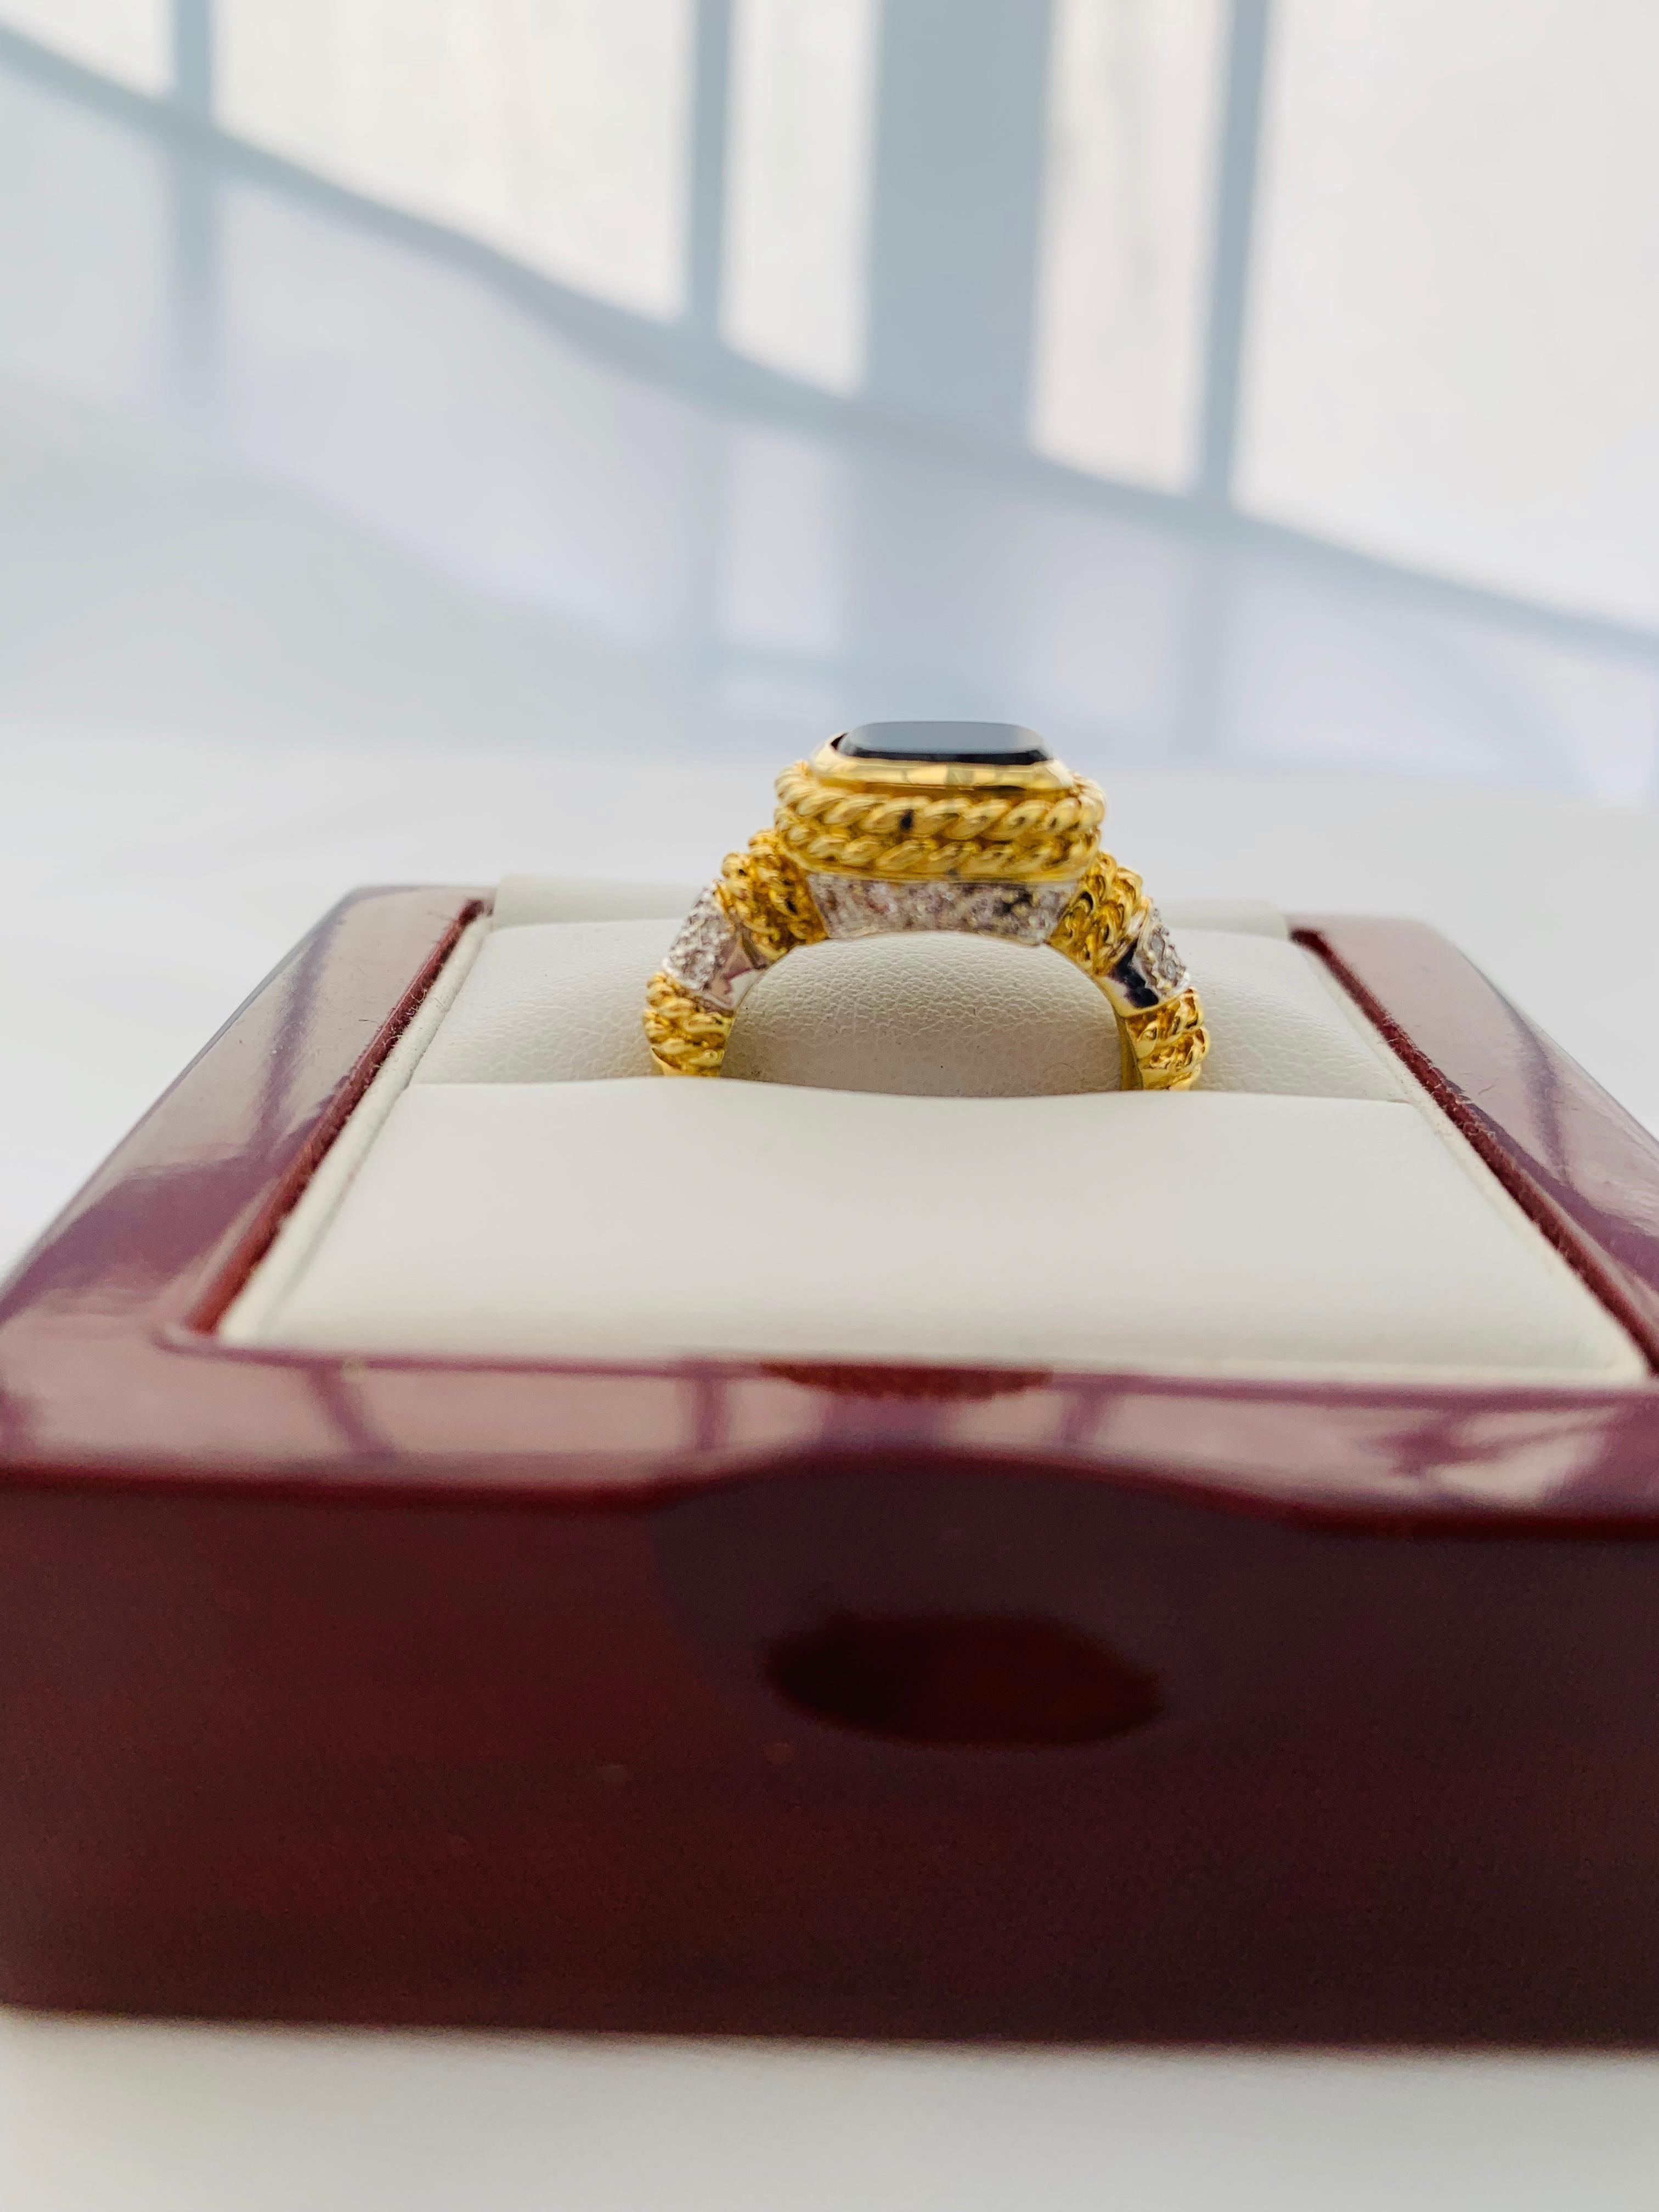 Designer Cassis 18K yellow Gold, Diamond & Onyx ladies Ring Size 5.75  6